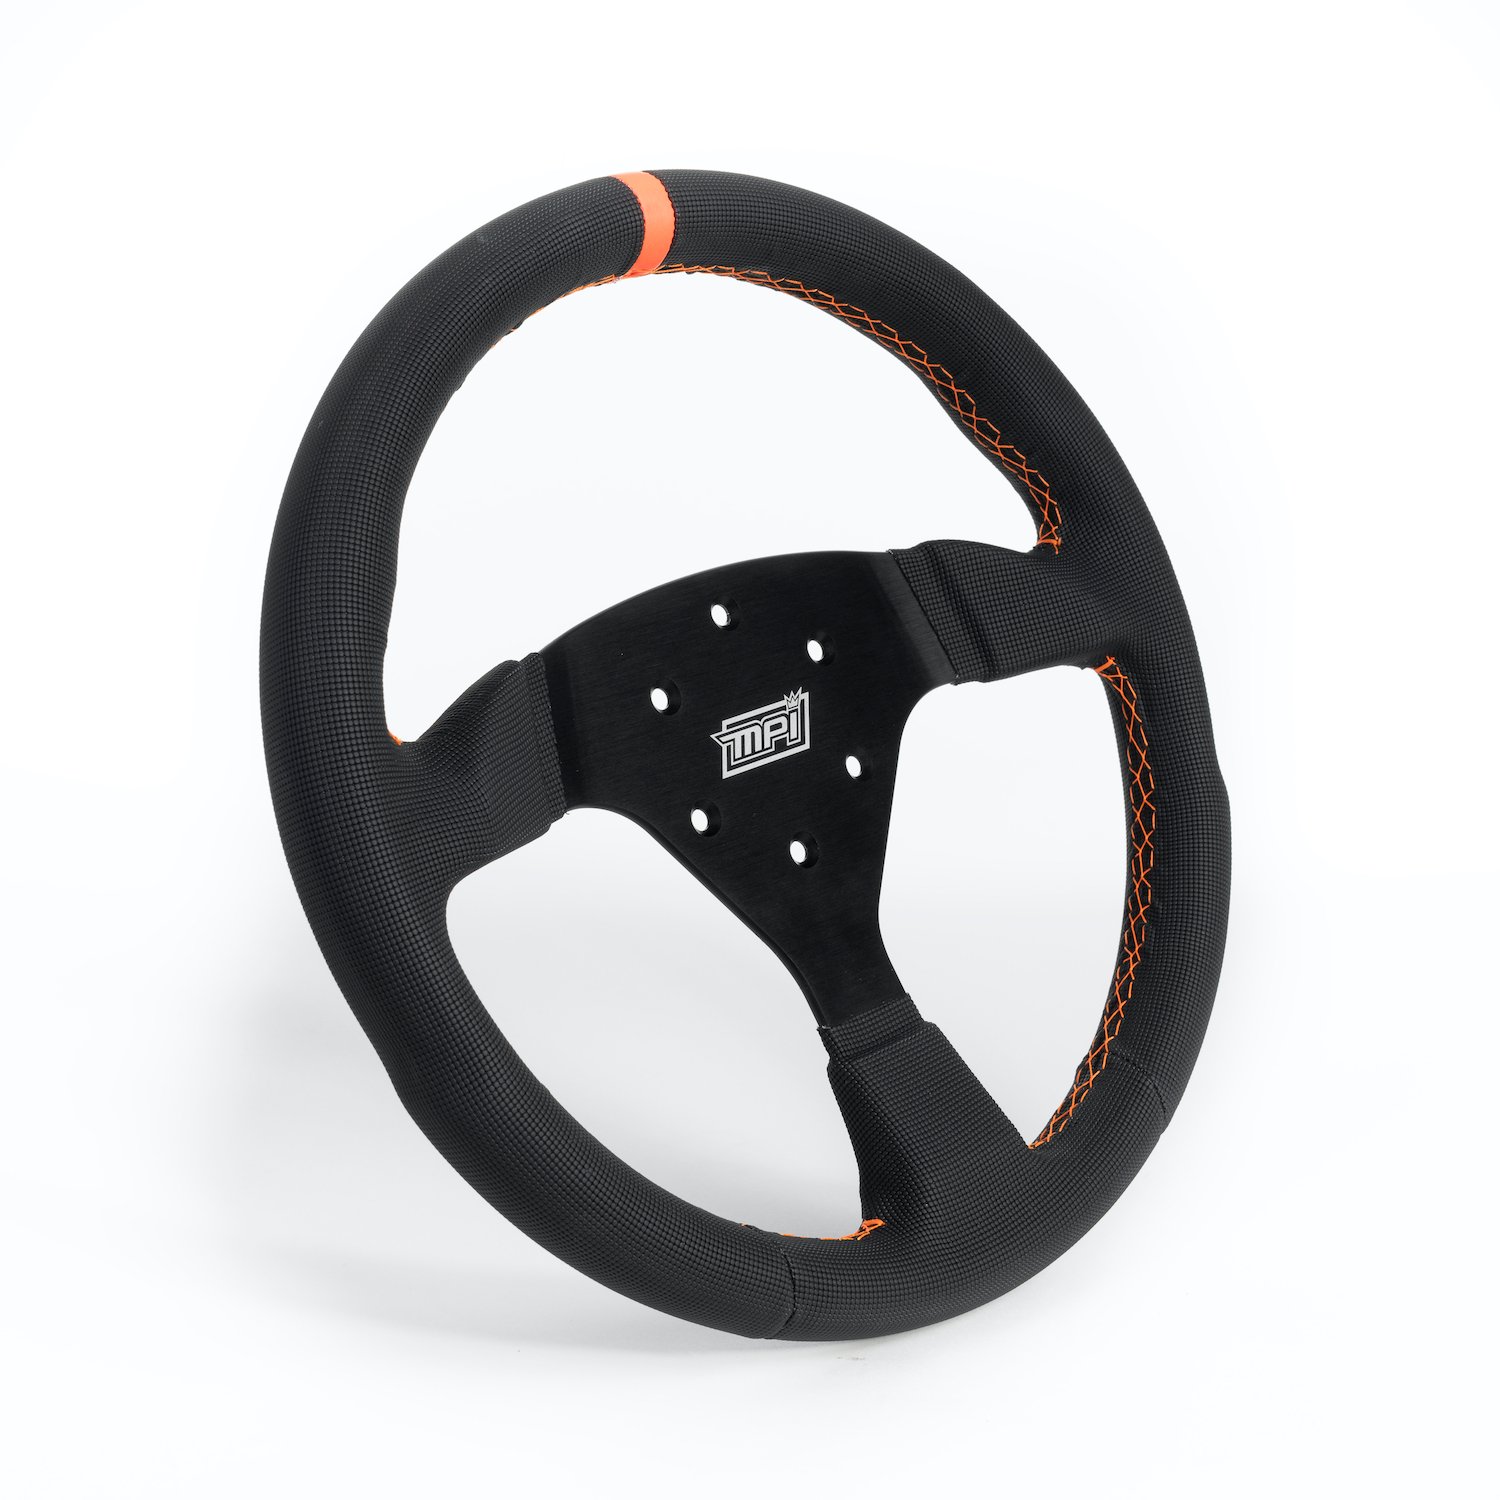 Road Course / Track Days Steering Wheel 13 in. Diameter